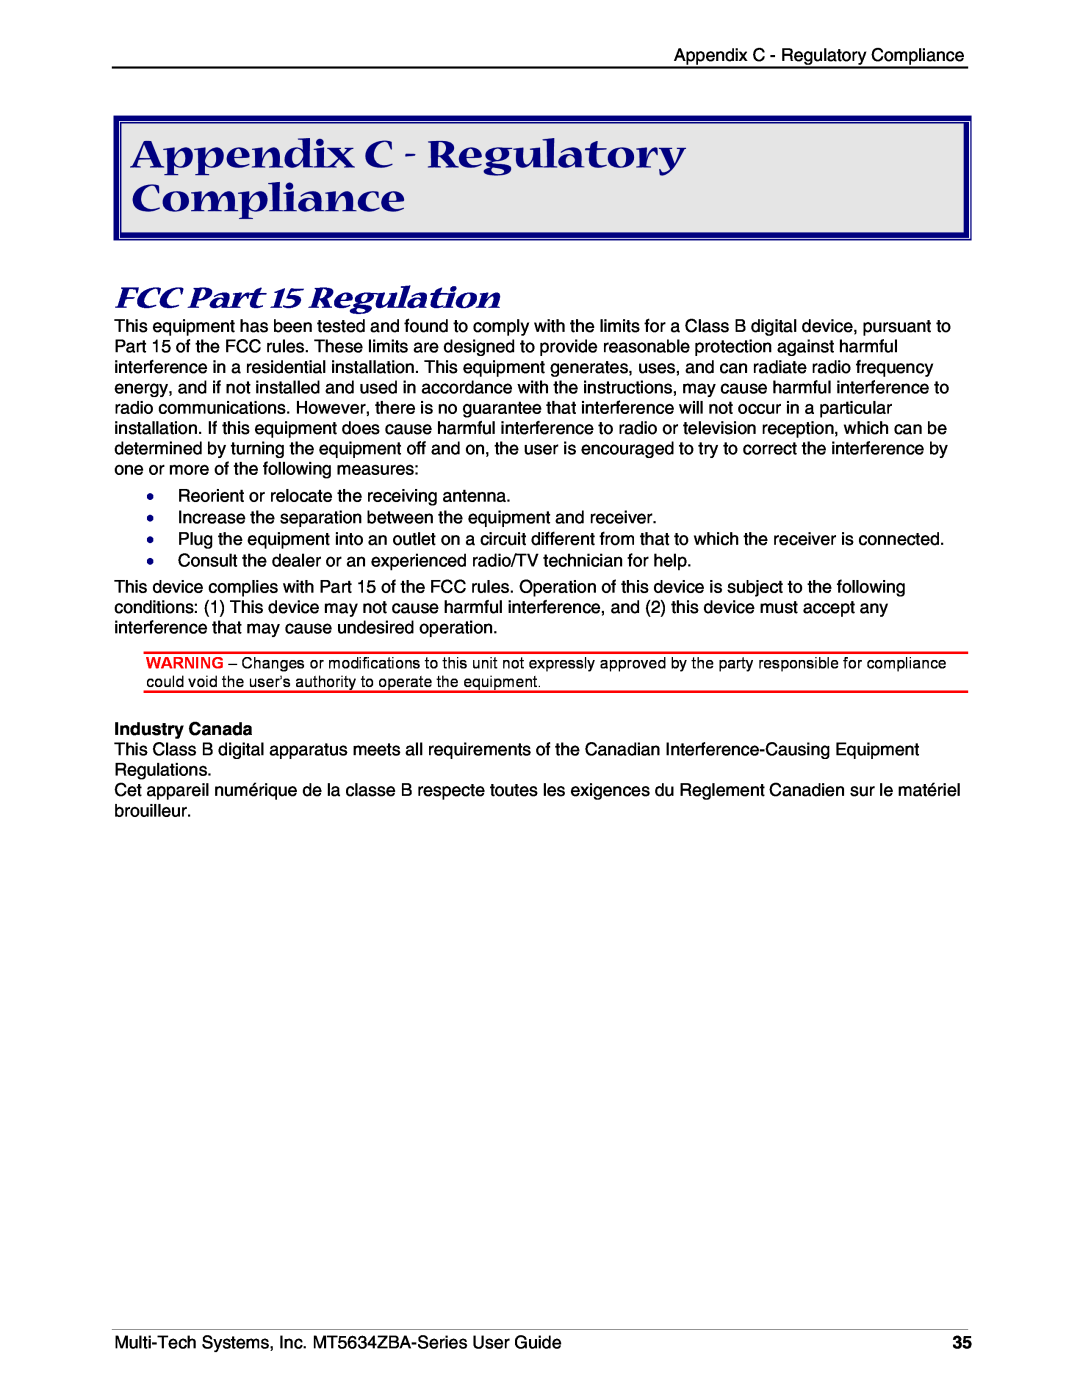 Multi-Tech Systems MT5634ZBAV.92 manual Appendix C - Regulatory Compliance, FCC Part 15 Regulation, Industry Canada 